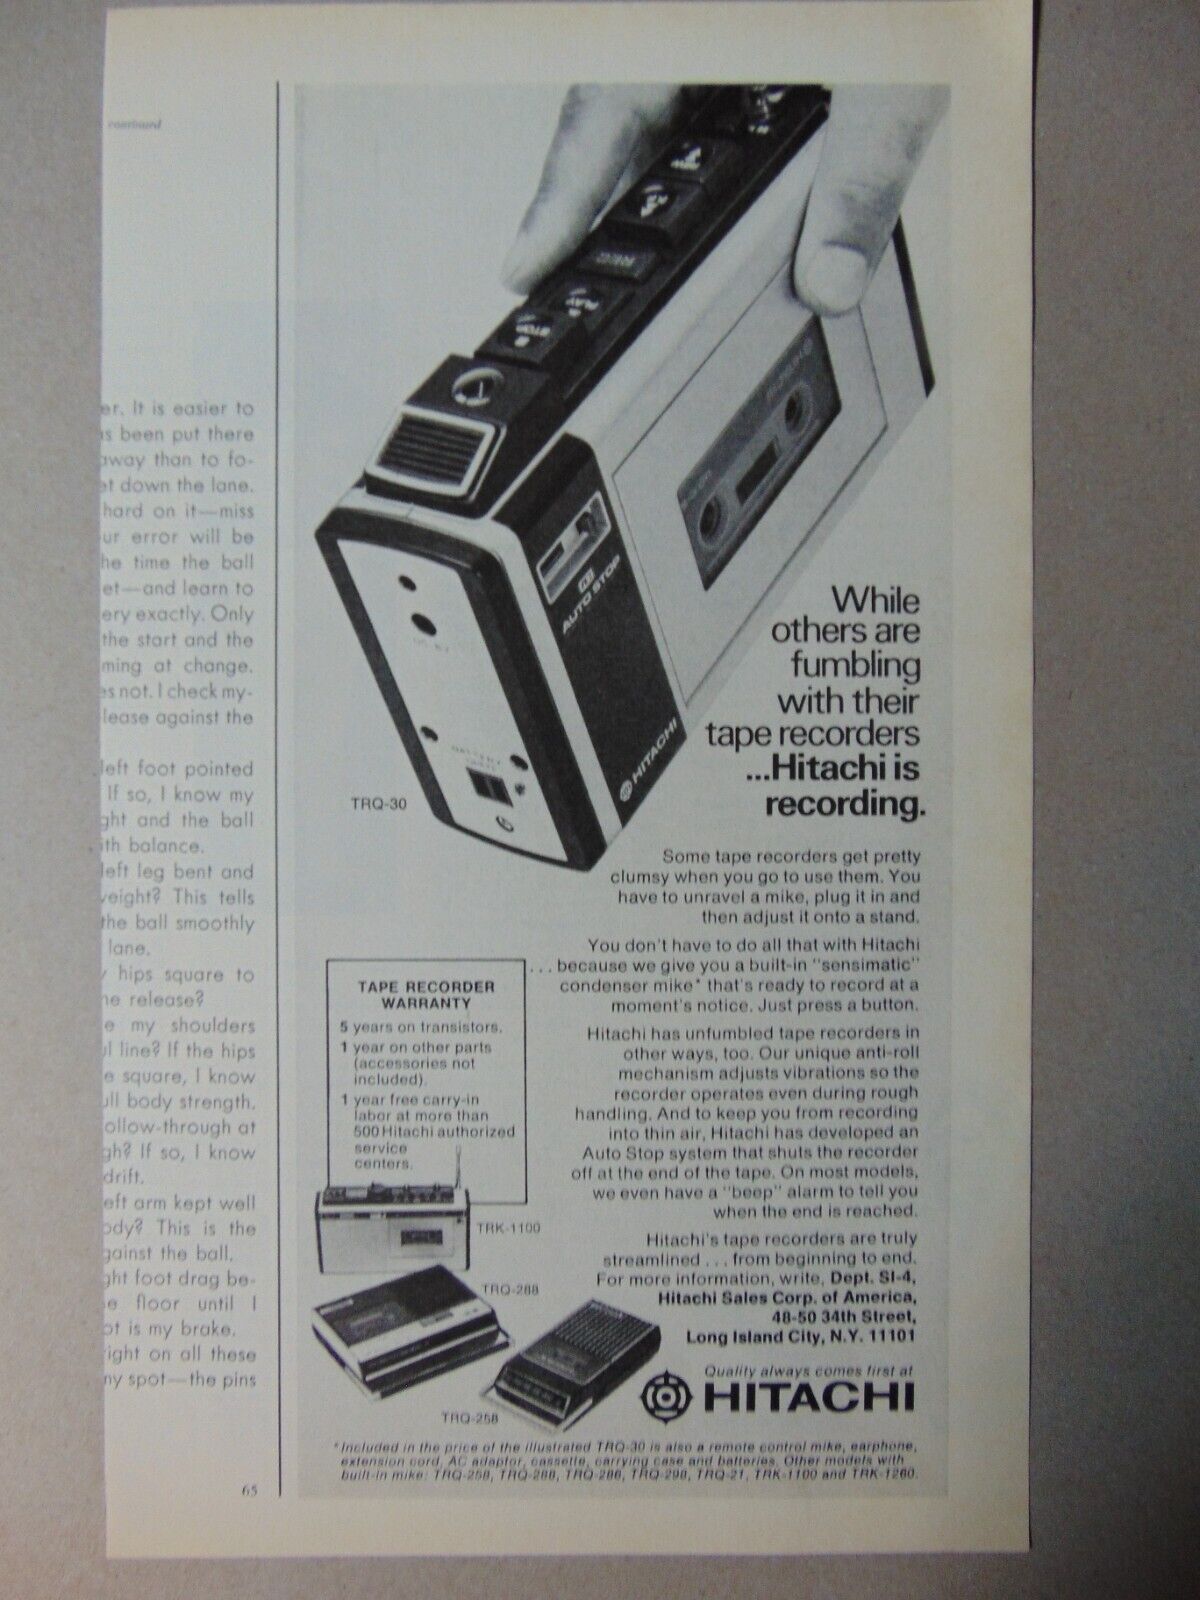 1972 HITACHI Tape Recorder Hand Held photo print ad